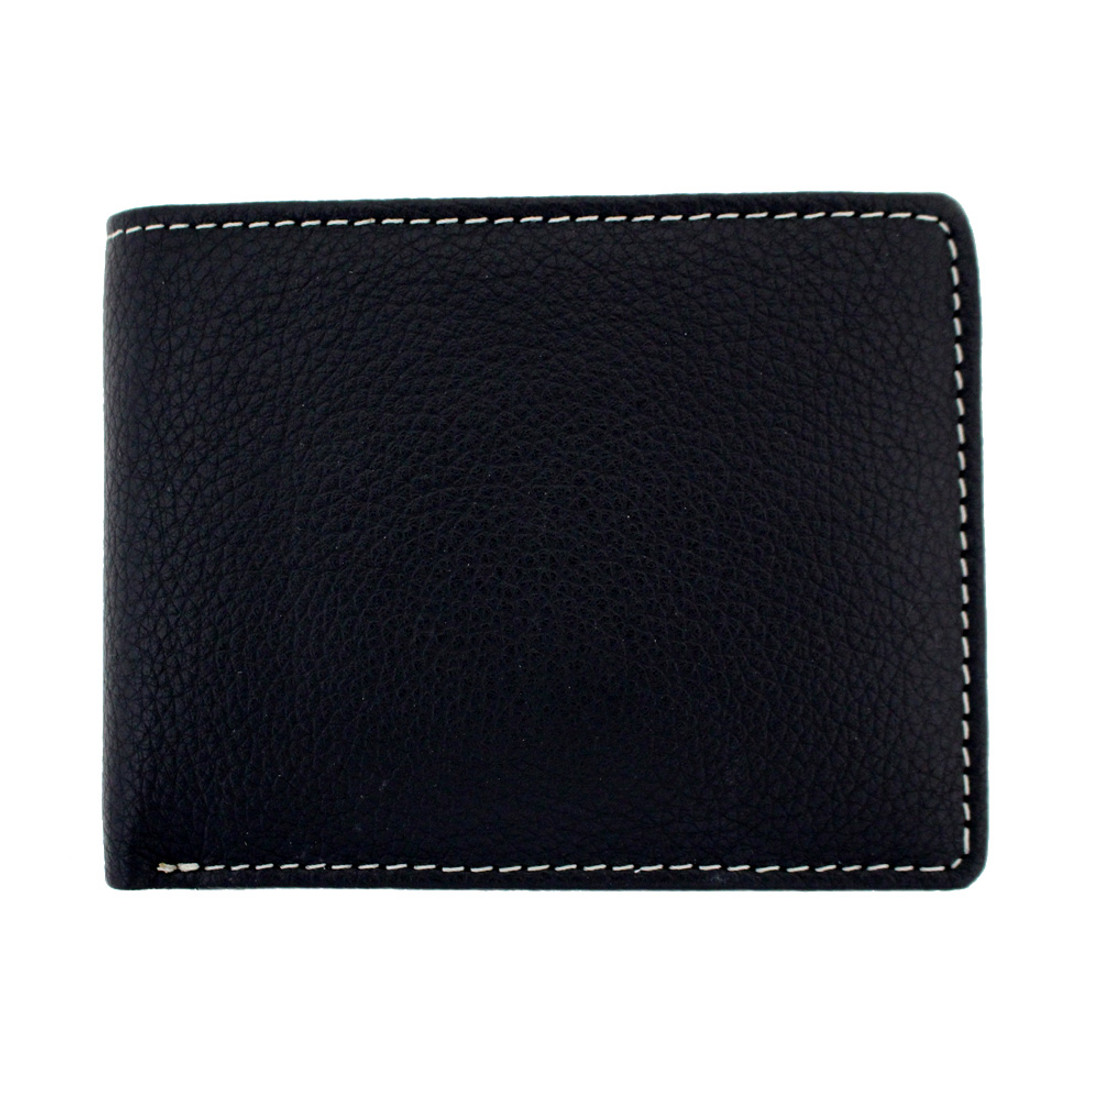 Men's Black Leather Bifold Wallet with White Stitching around edge.